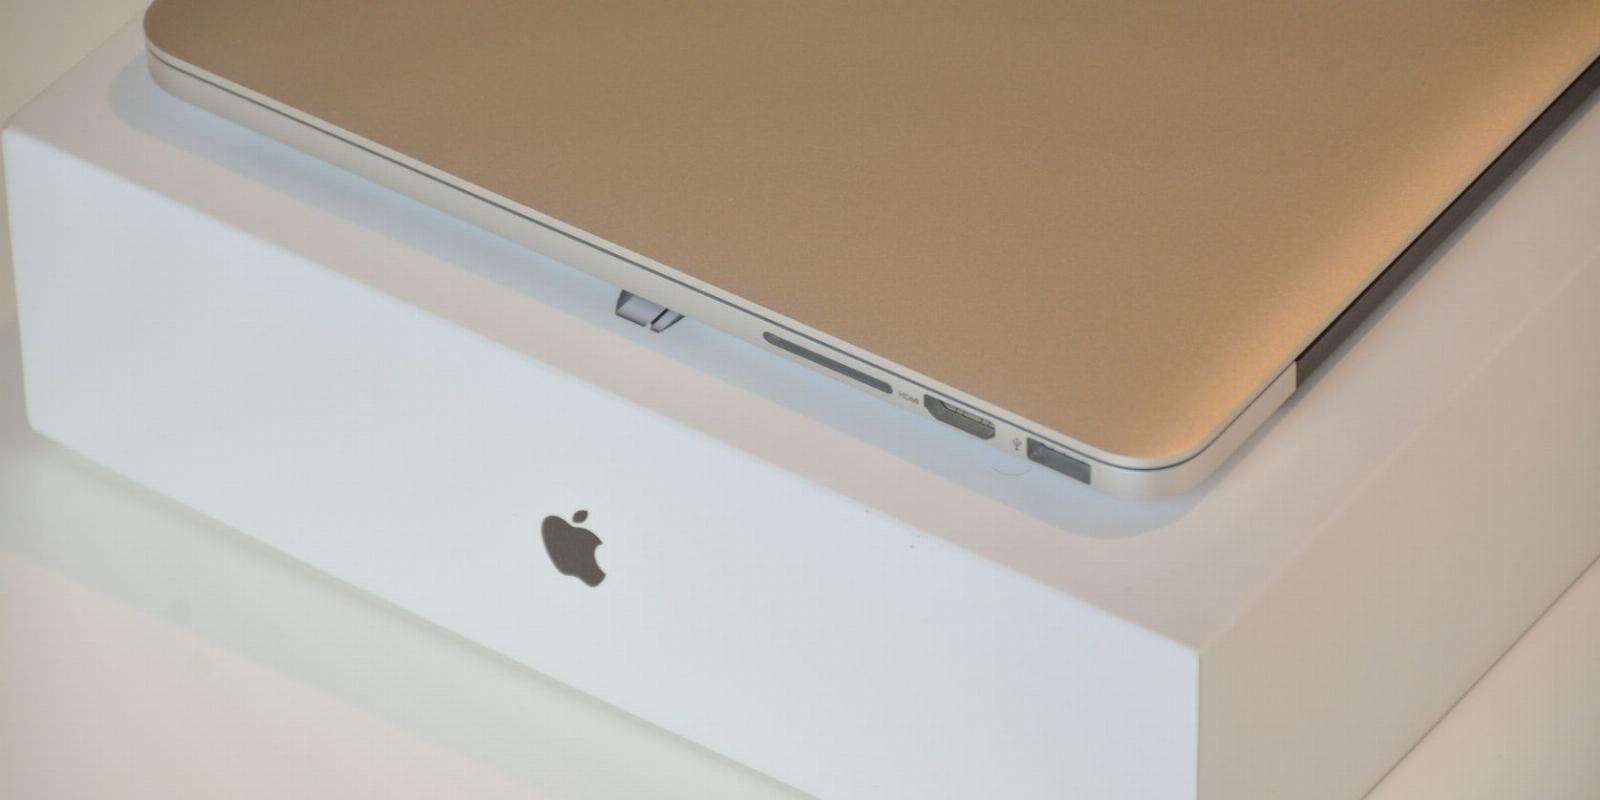 Refurbished Mac vs. Used Mac: Which Is Better?